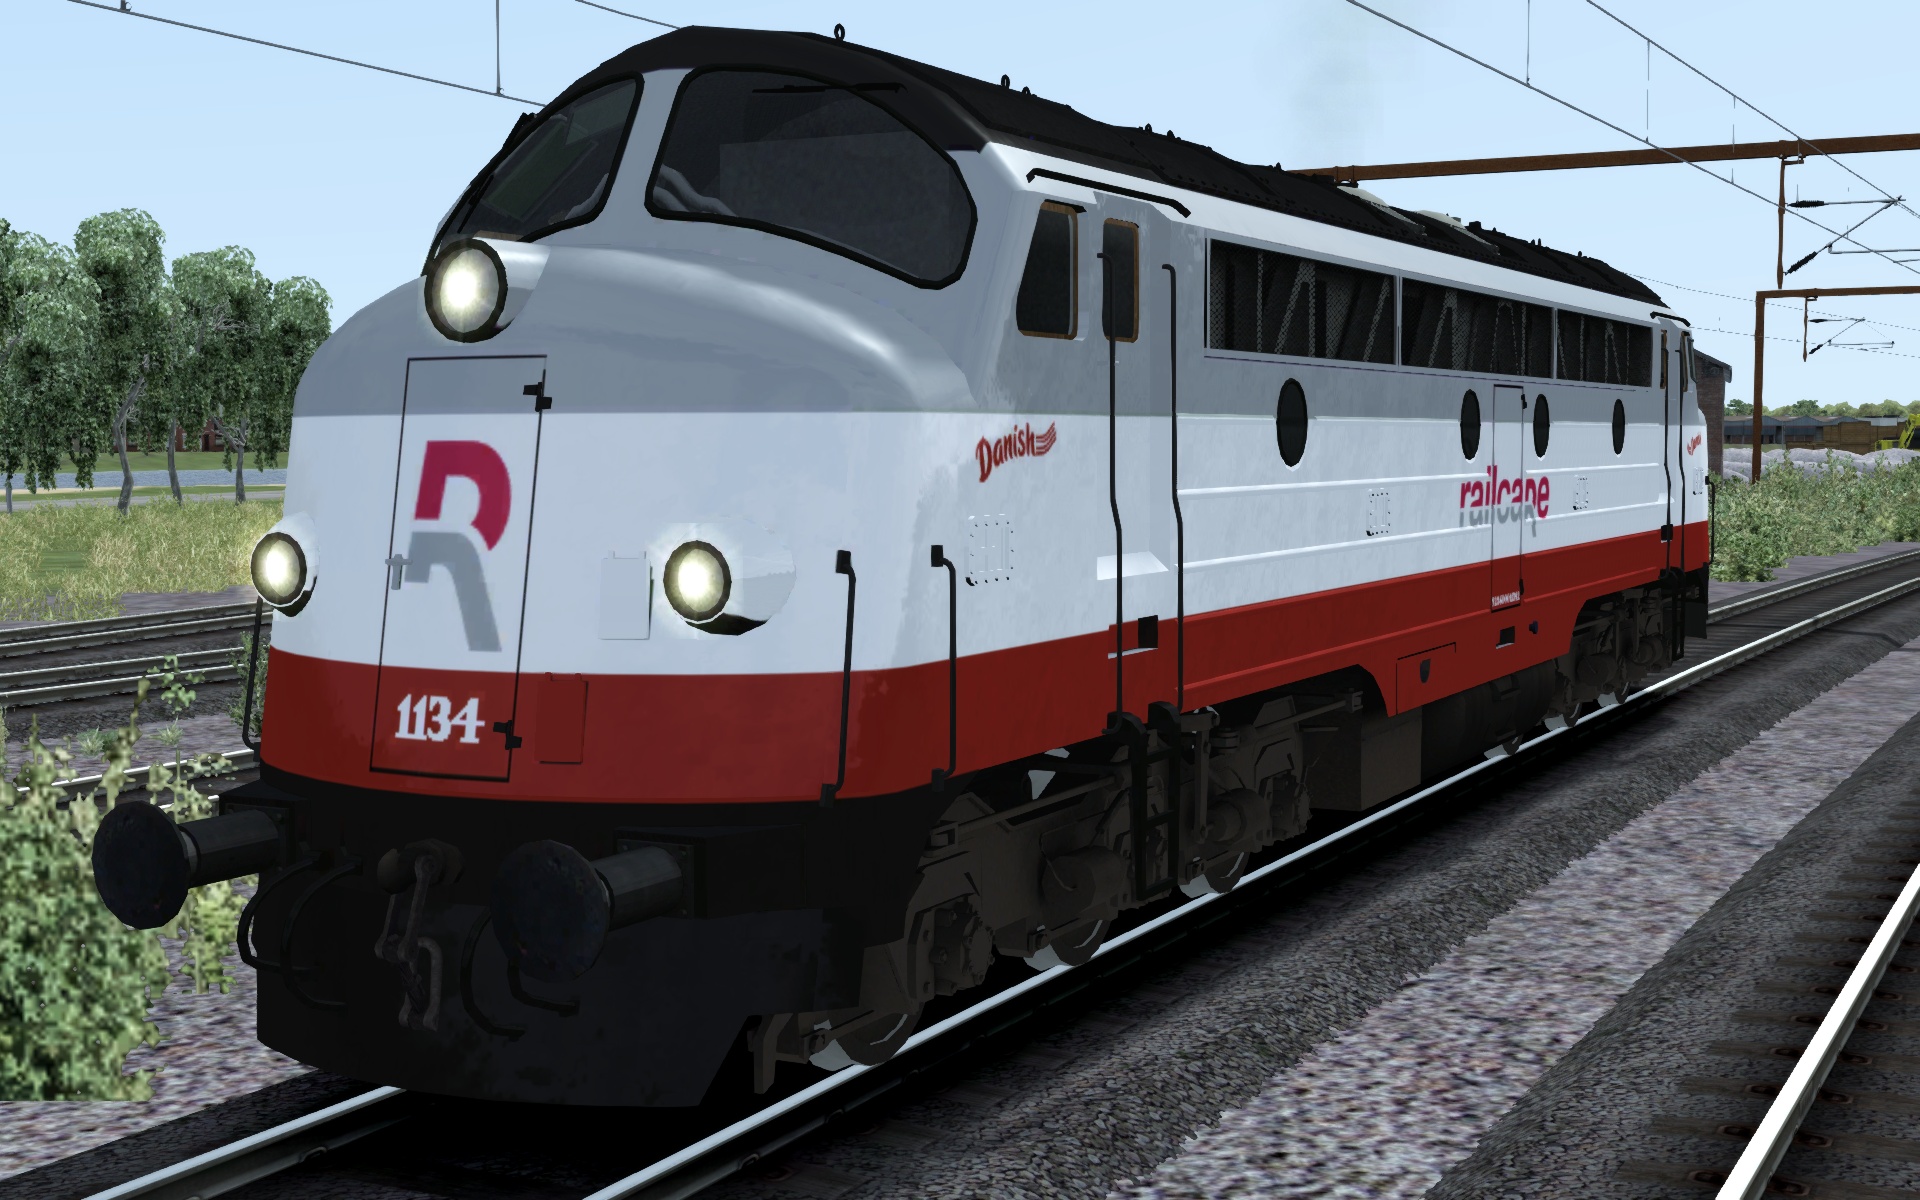 MY 1134 Railcare